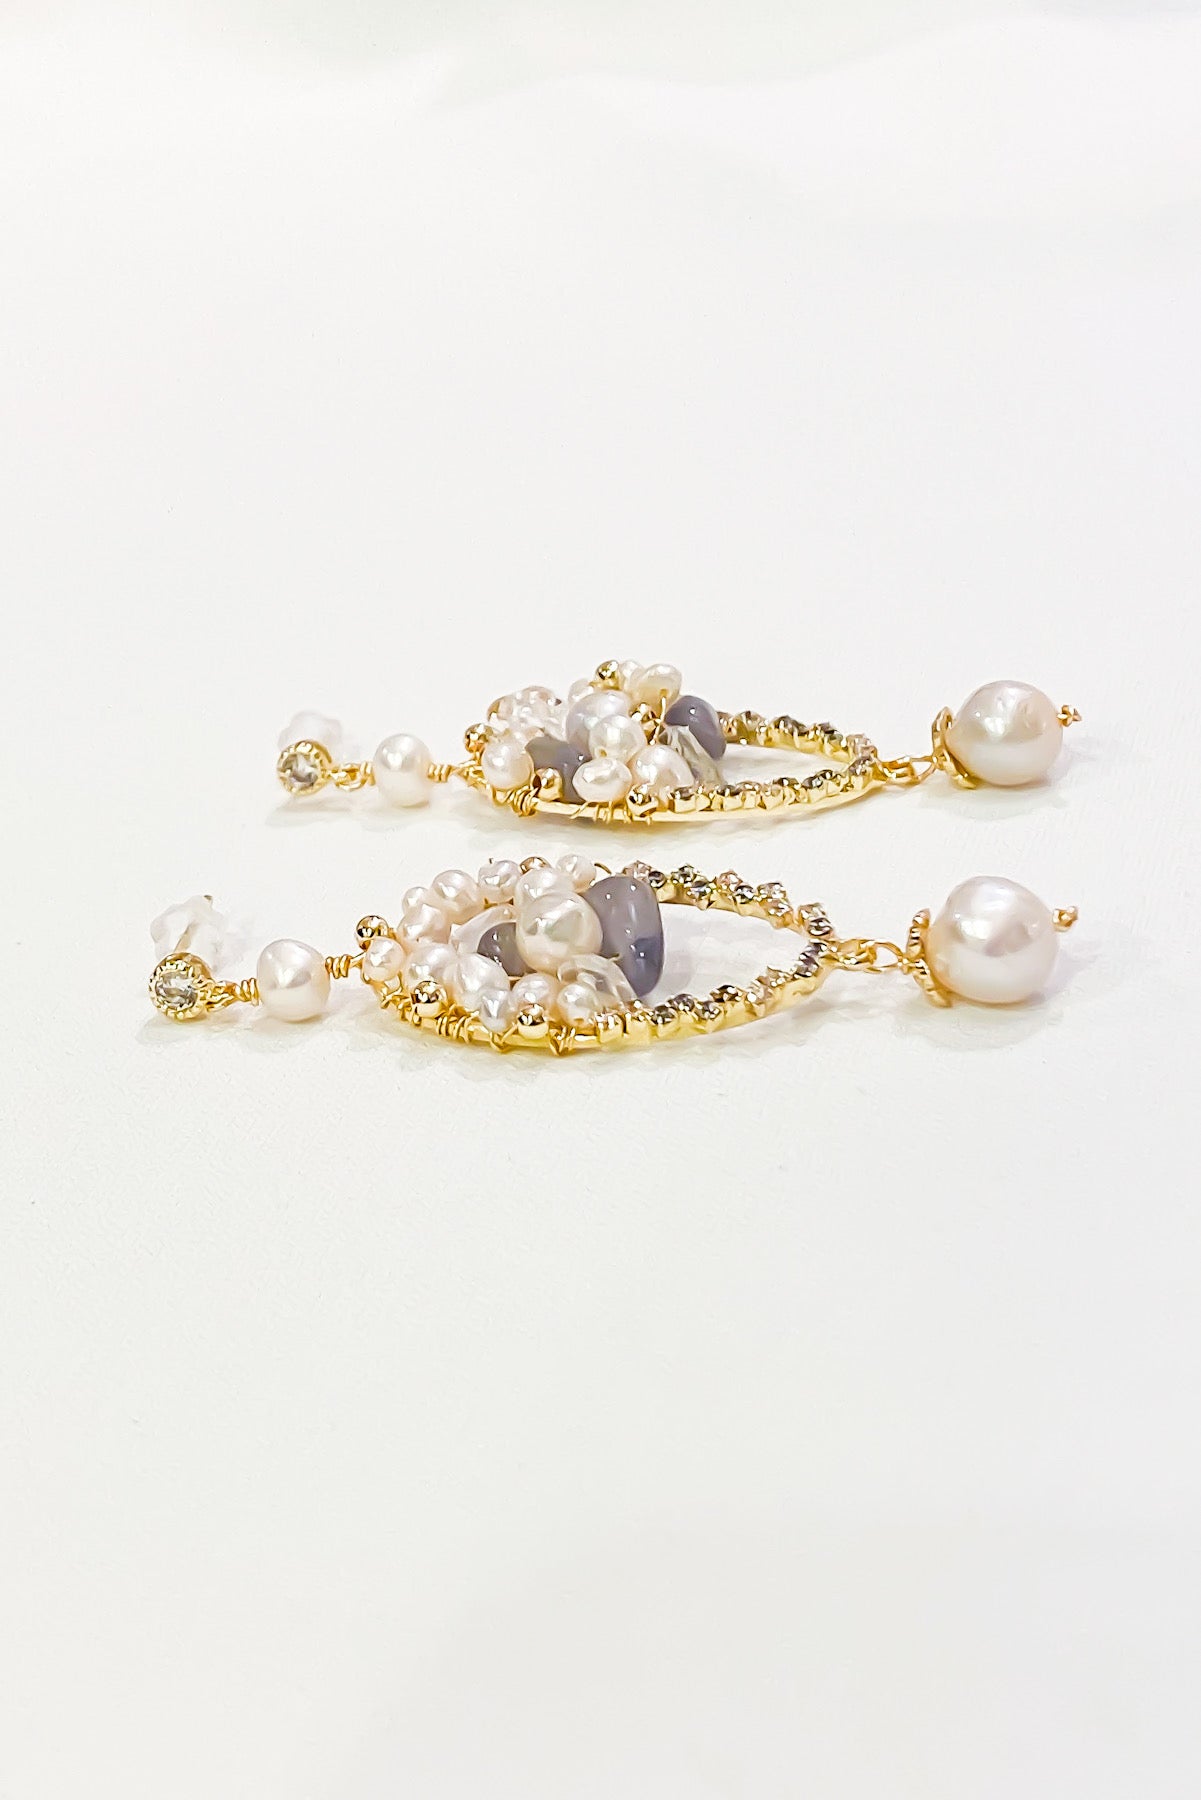 SKYE San Francisco Shop SF Chic Modern Elegant Classy Women Jewelry French Parisian Minimalist Marquis 18K Gold Crystal Pearl Earrings 5